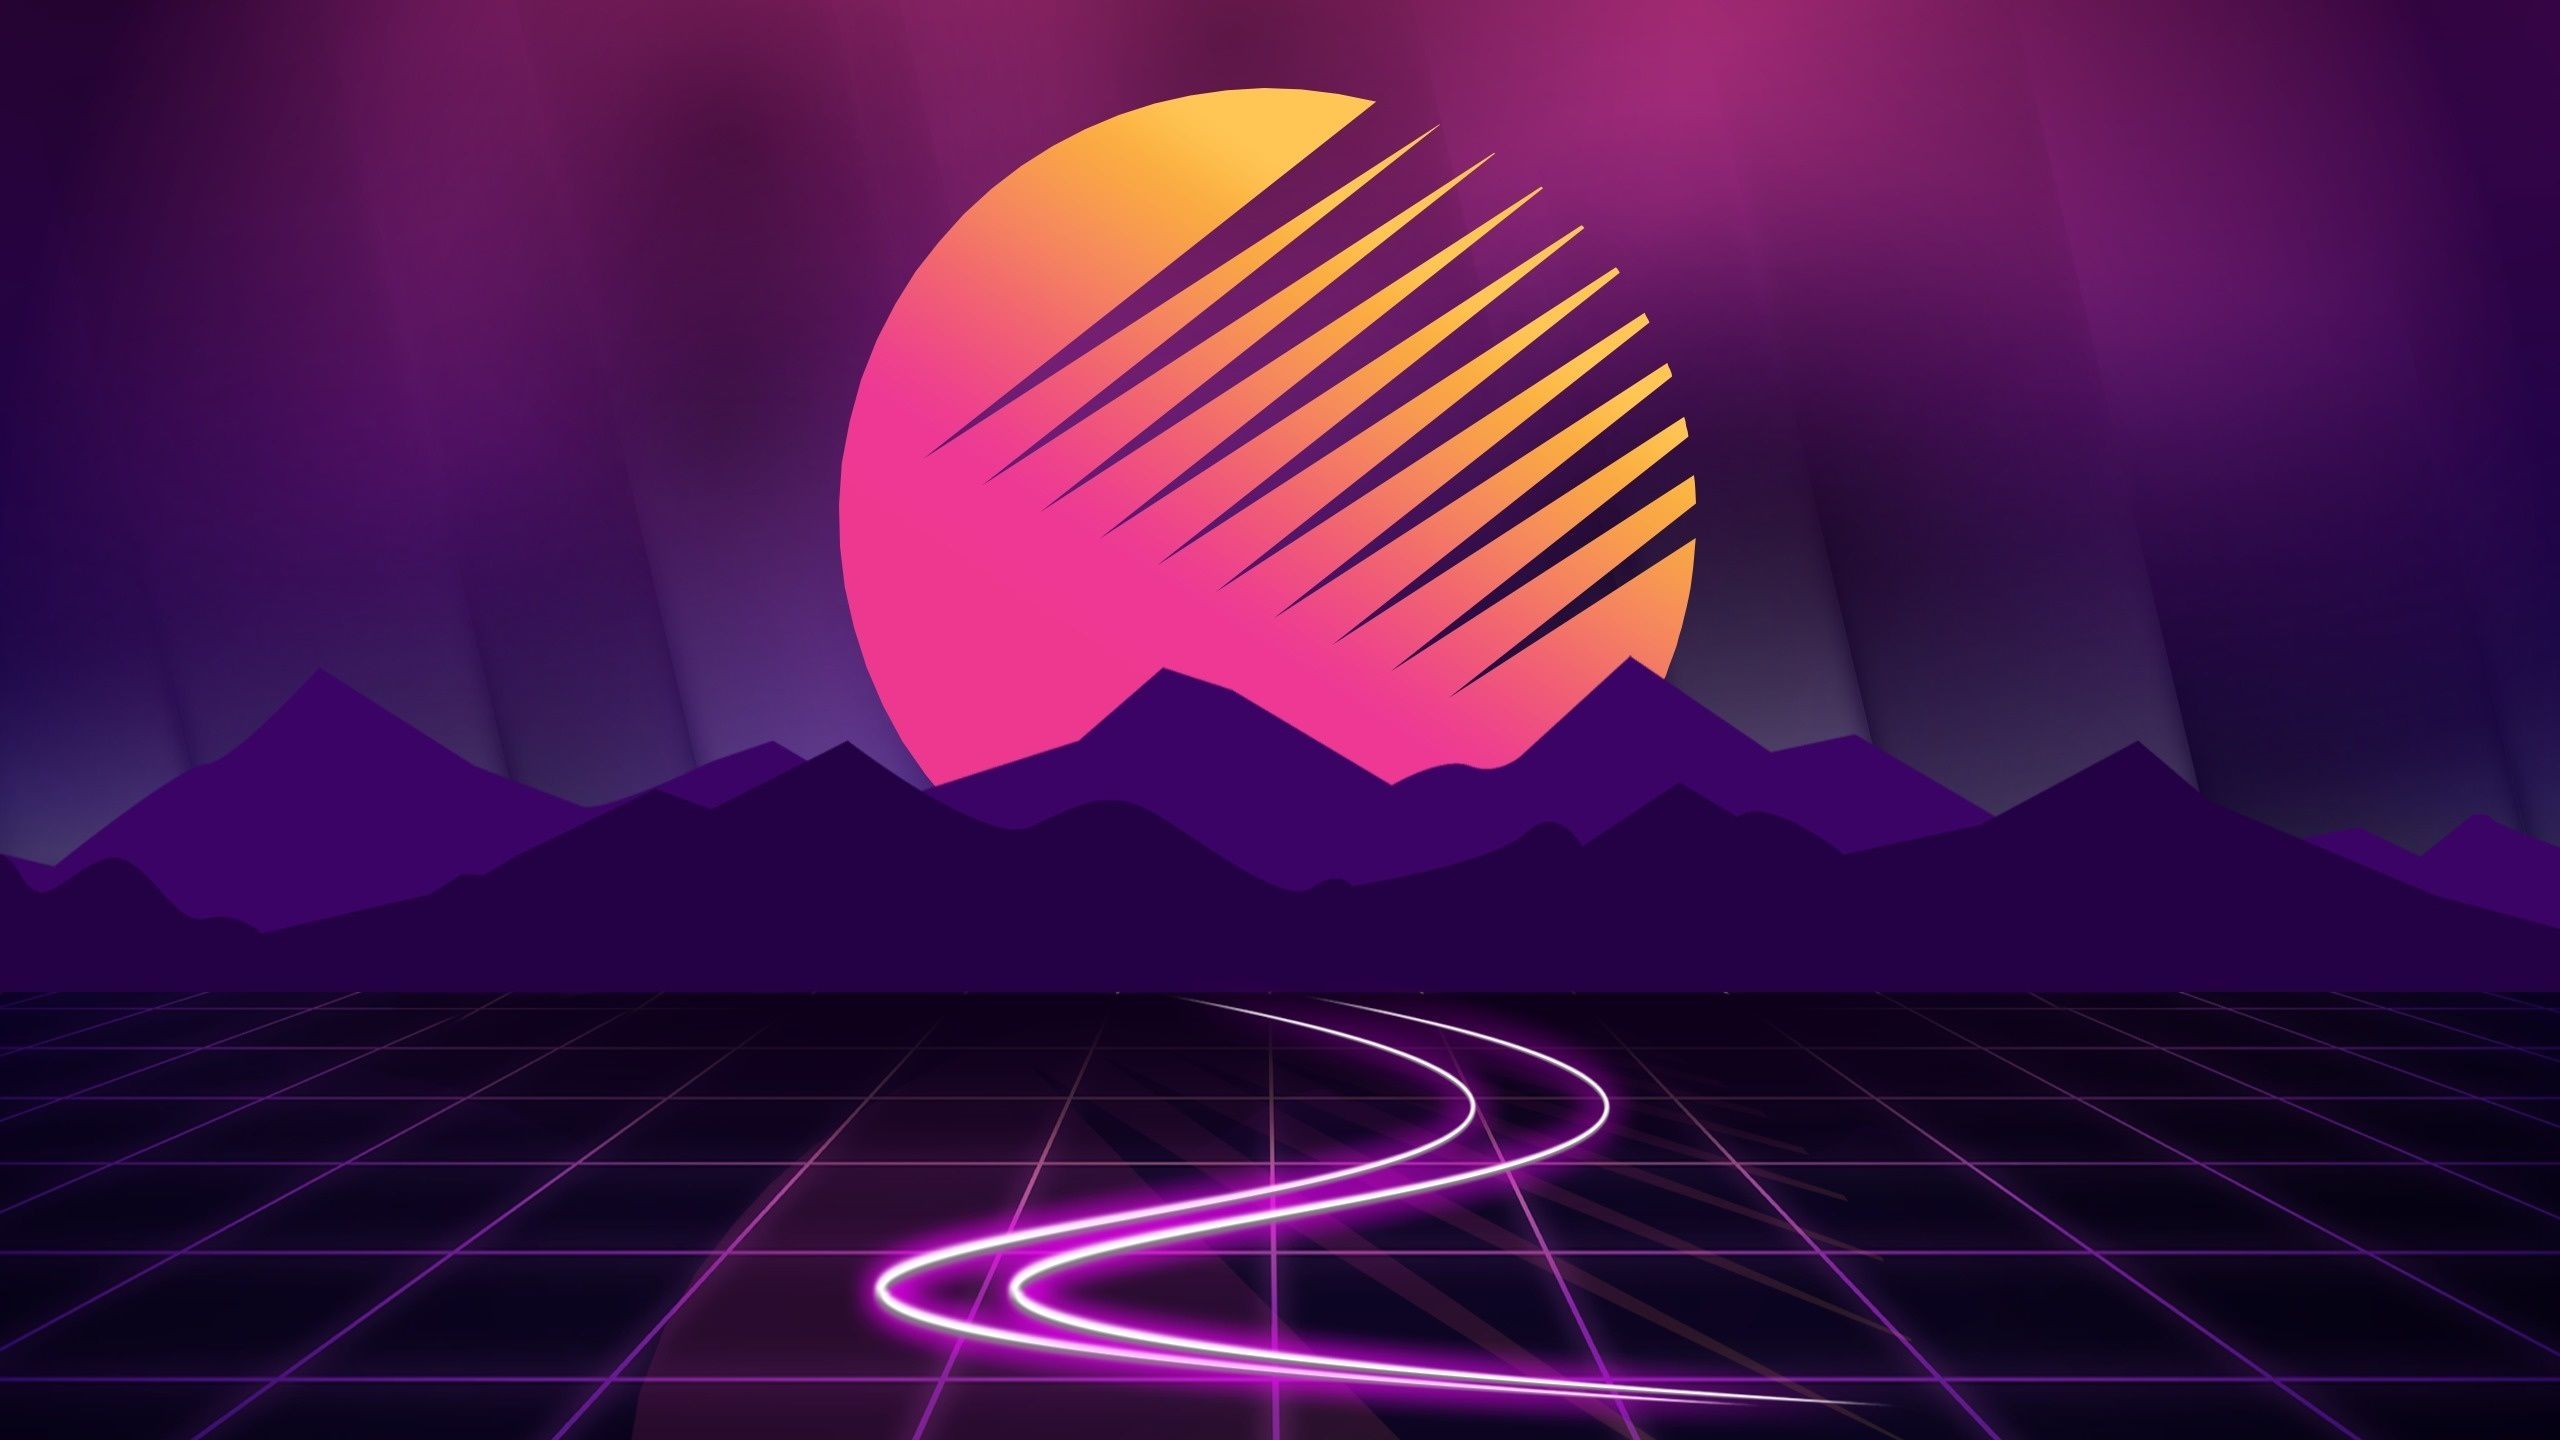 Download 2560x1600 wallpaper neon, cyberwave, purple, mountains